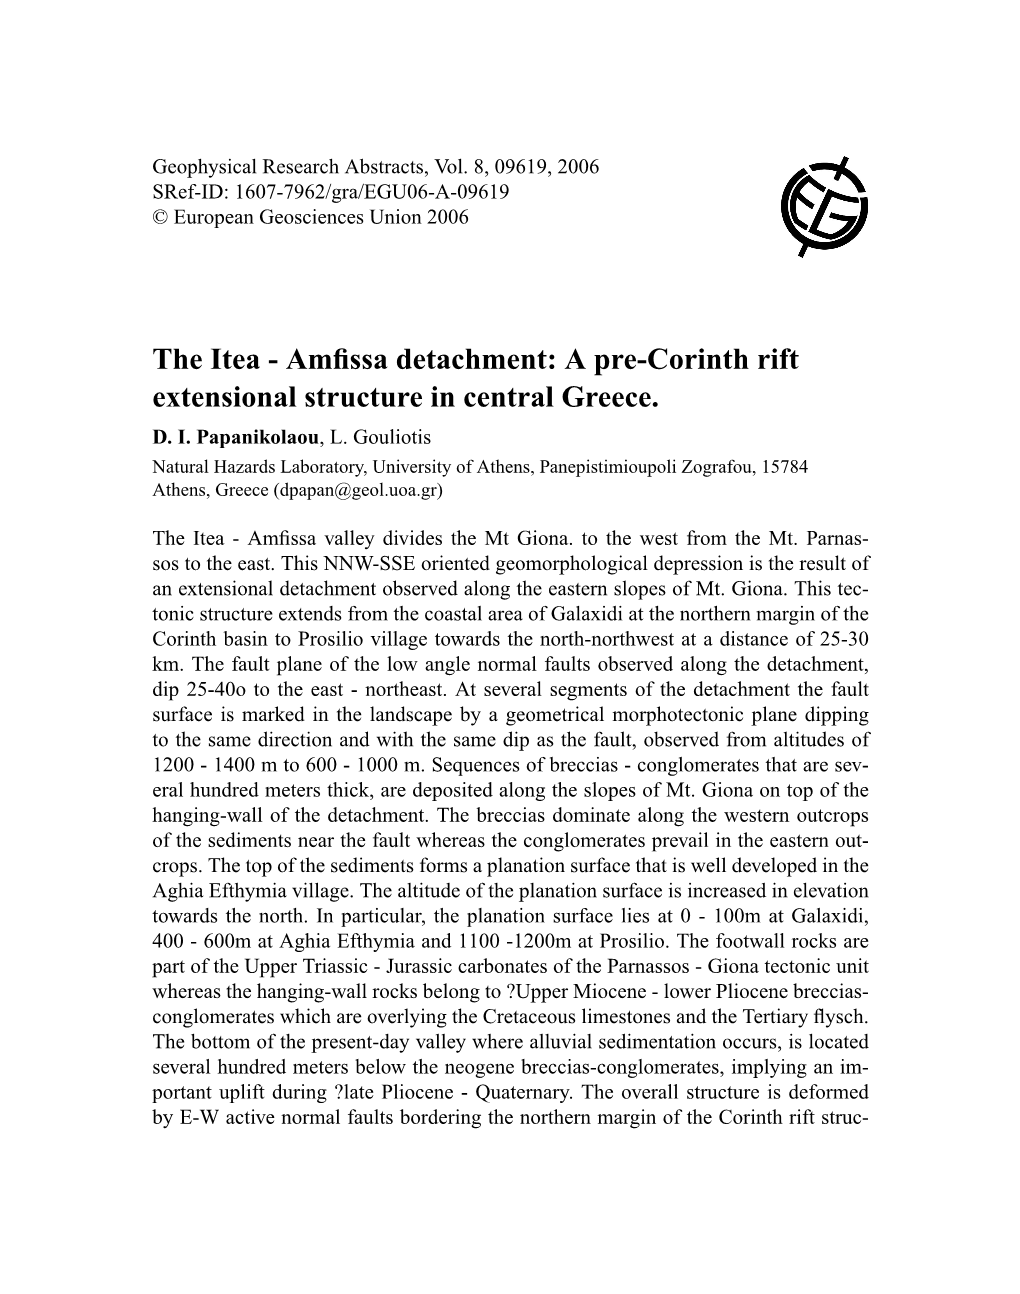 The Itea - Amﬁssa Detachment: a Pre-Corinth Rift Extensional Structure in Central Greece